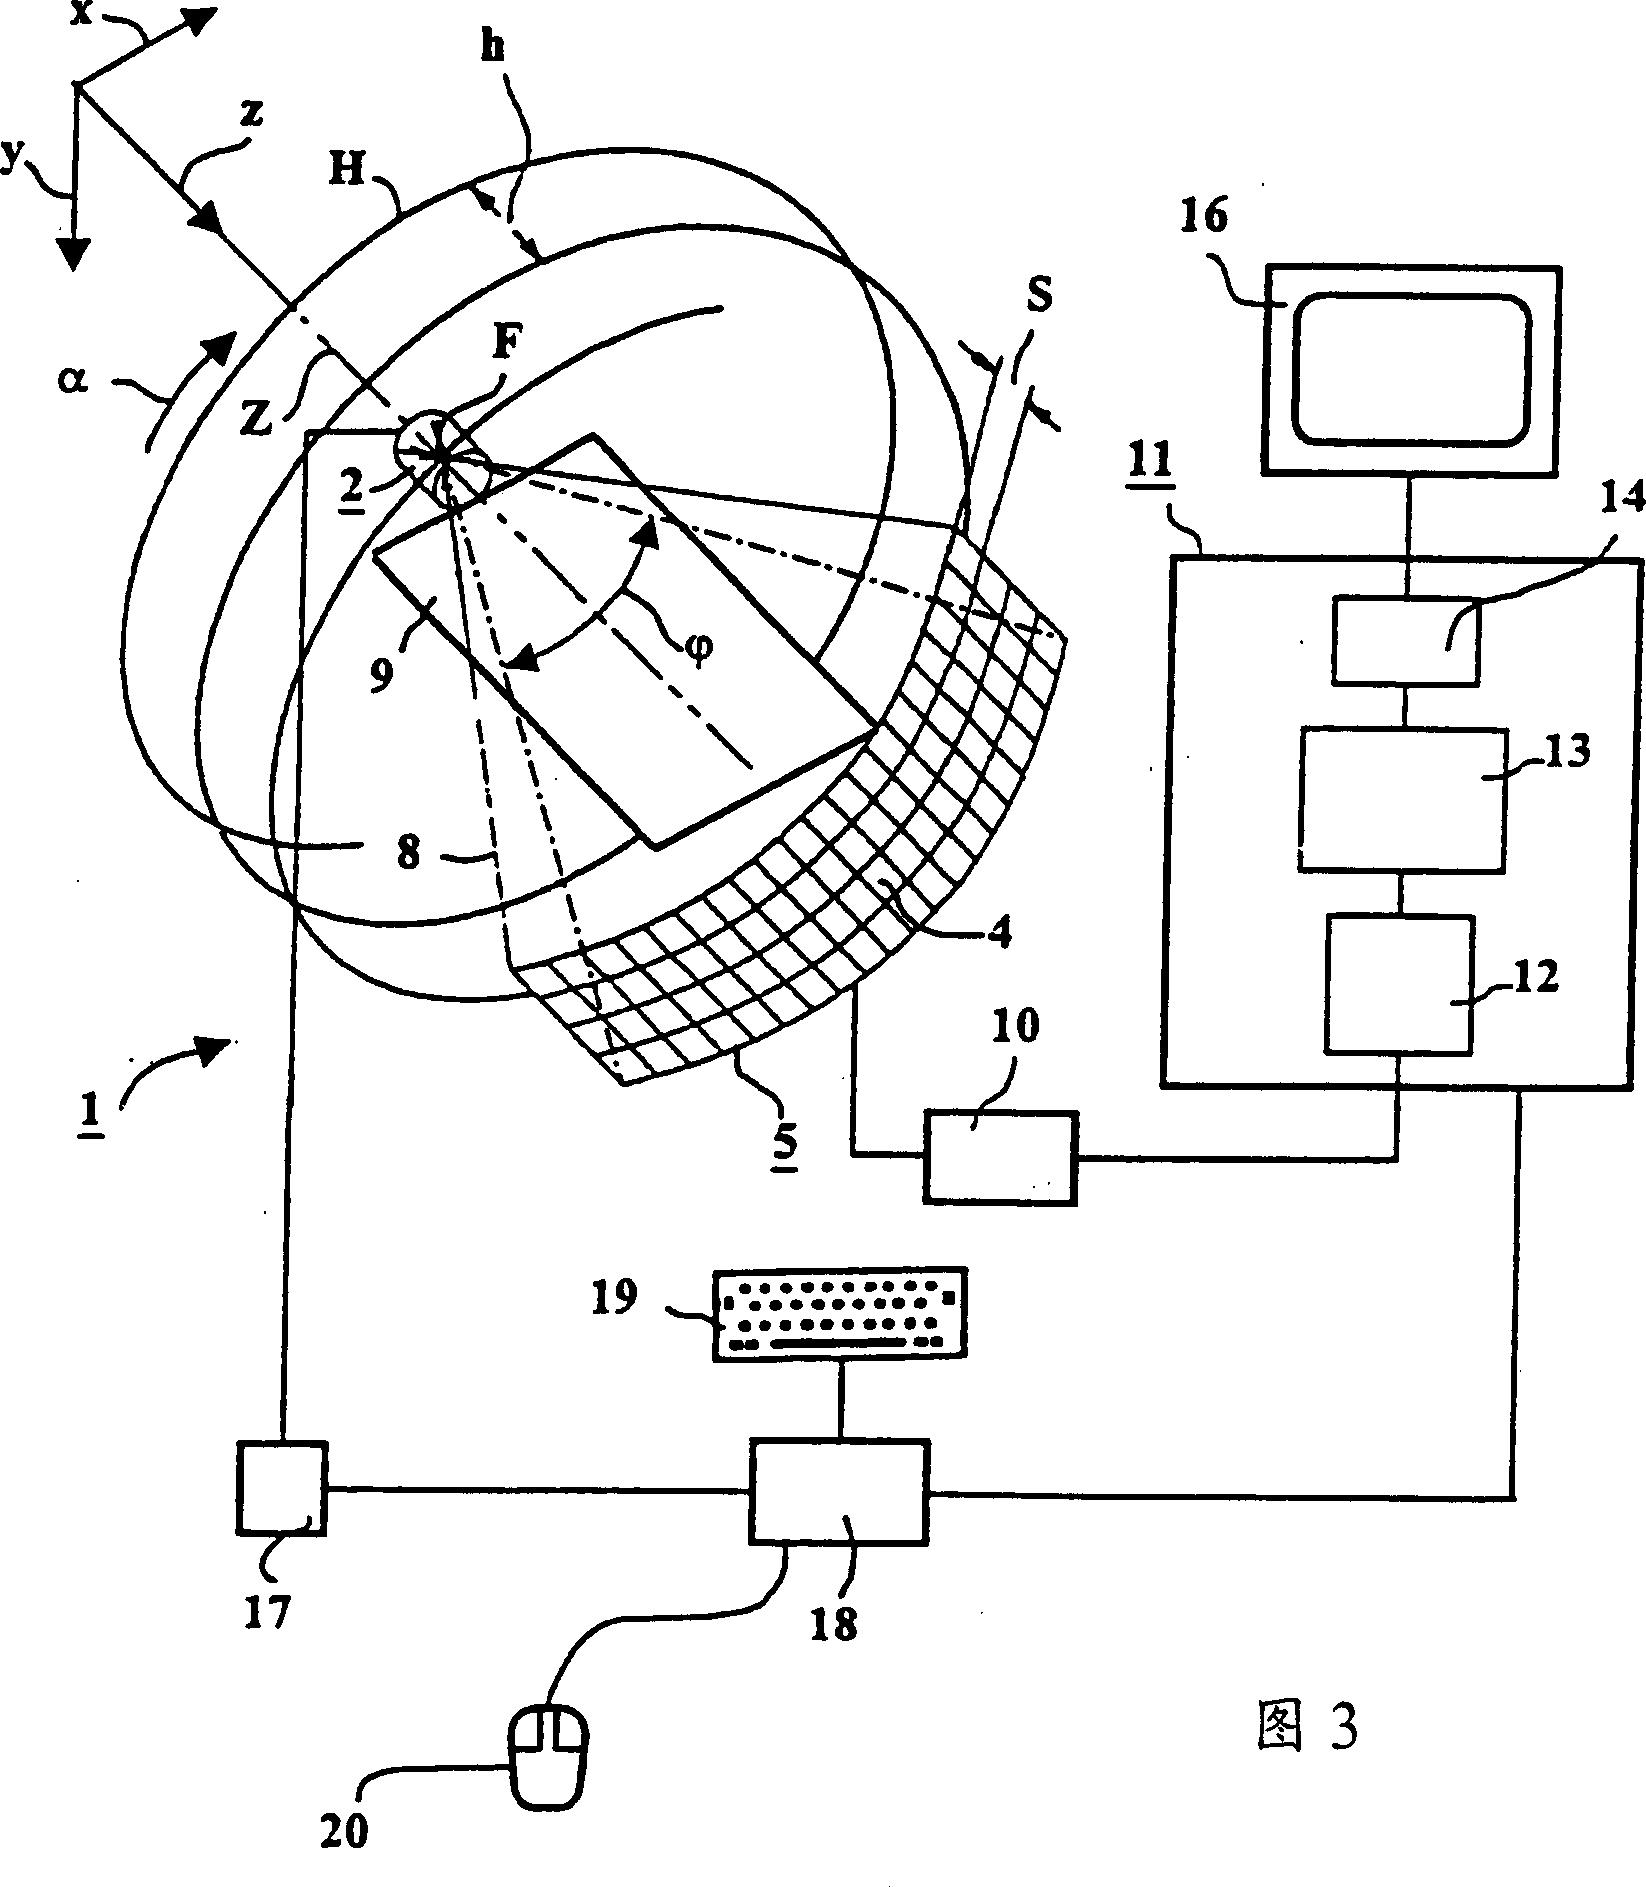 Computer tomographic method and computer tomographic (CT) instrument